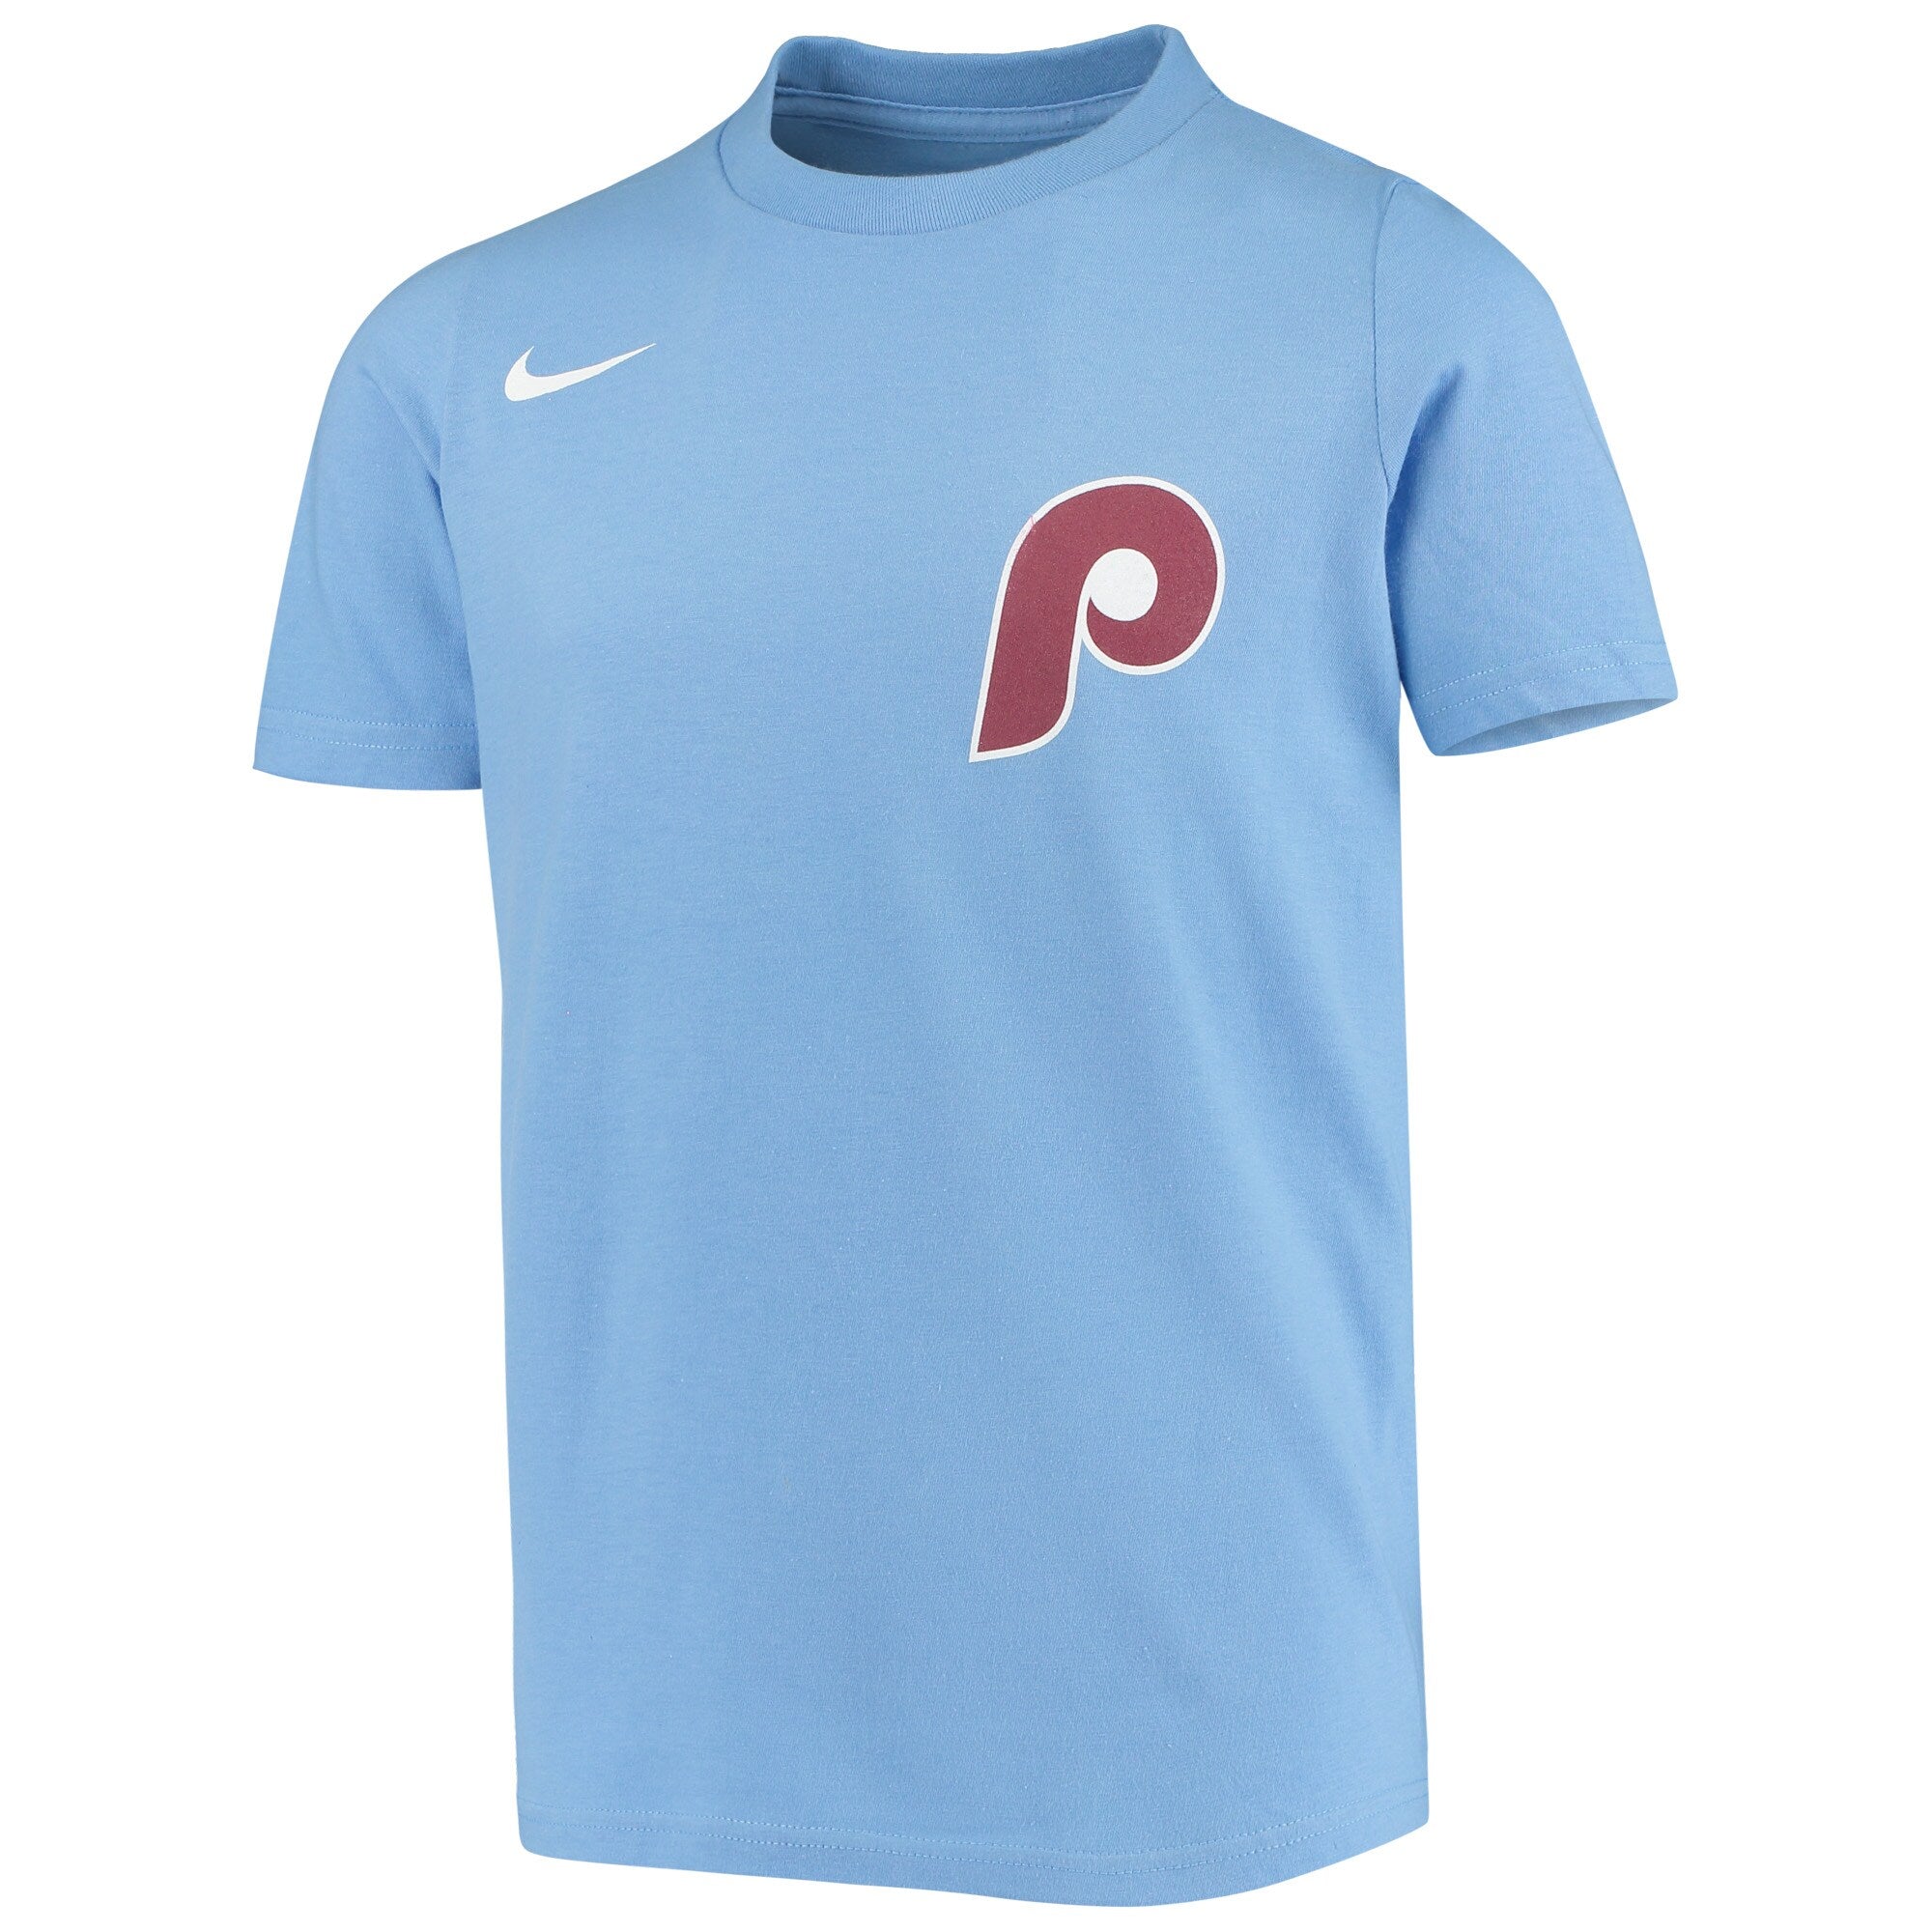 Youth Philadelphia Phillies Bryce Harper Nike Light Blue Player Name & Number T-Shirt